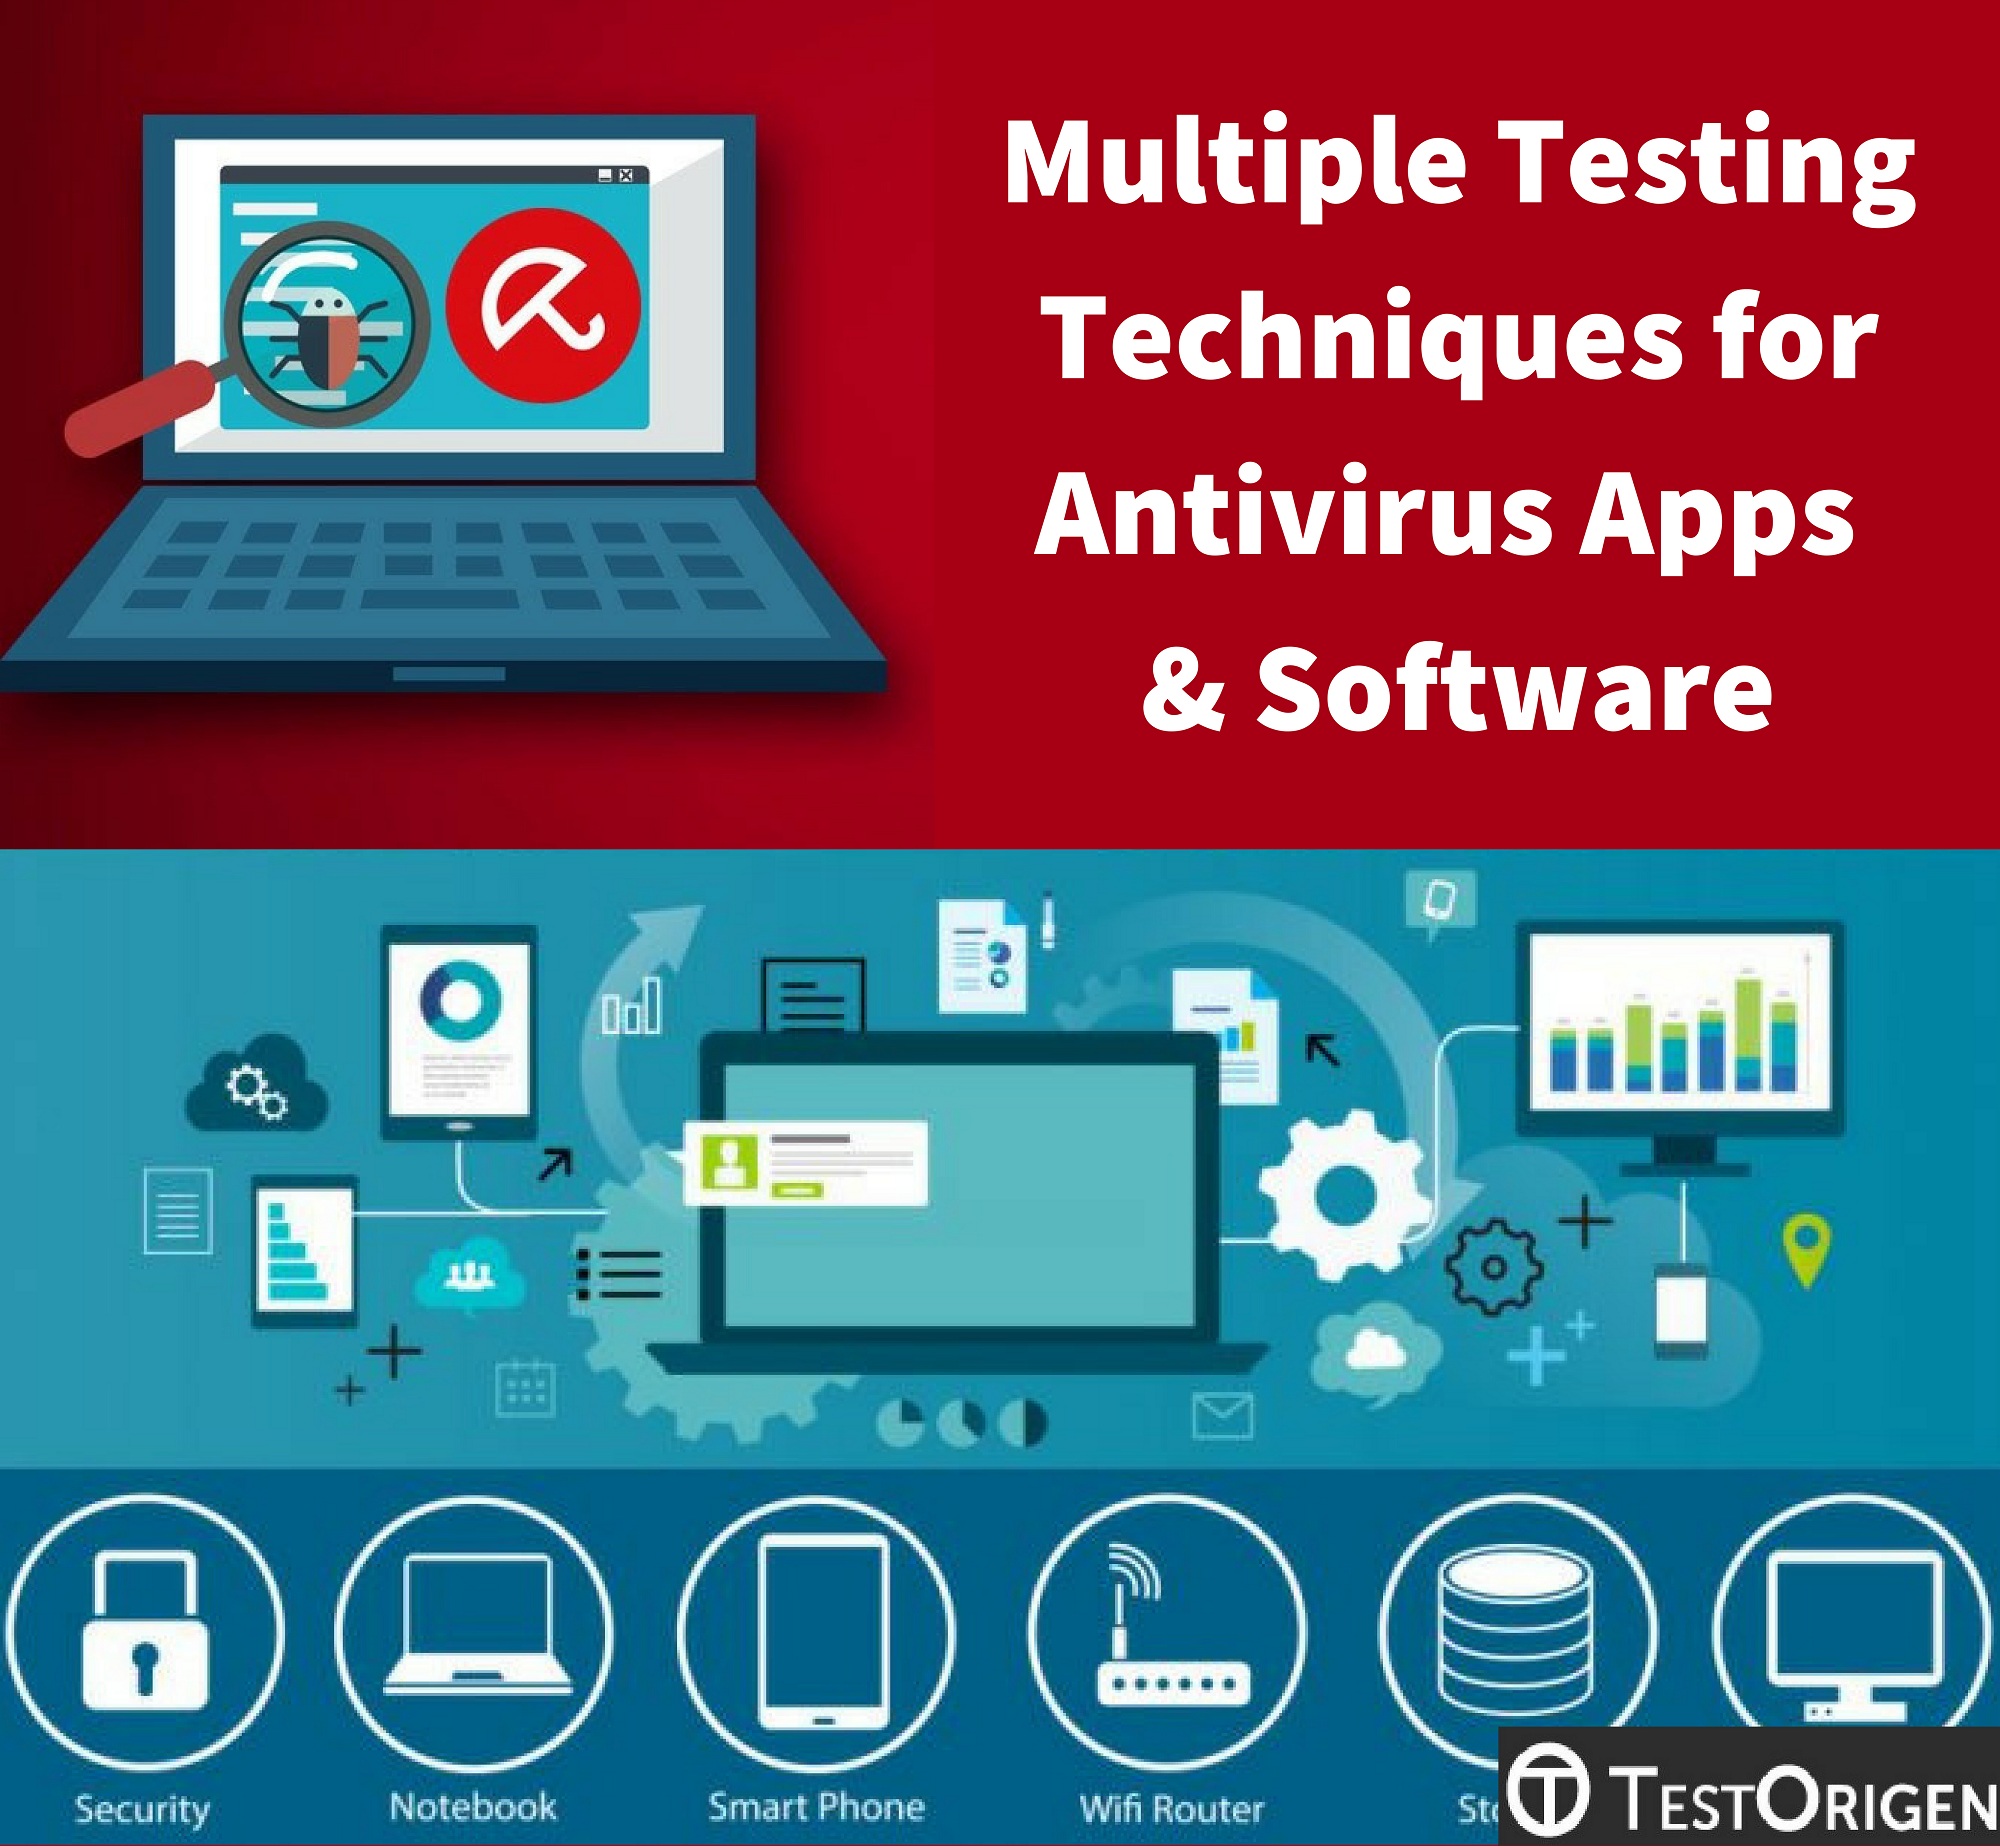 Multiple Testing Techniques for Antivirus Apps & Software